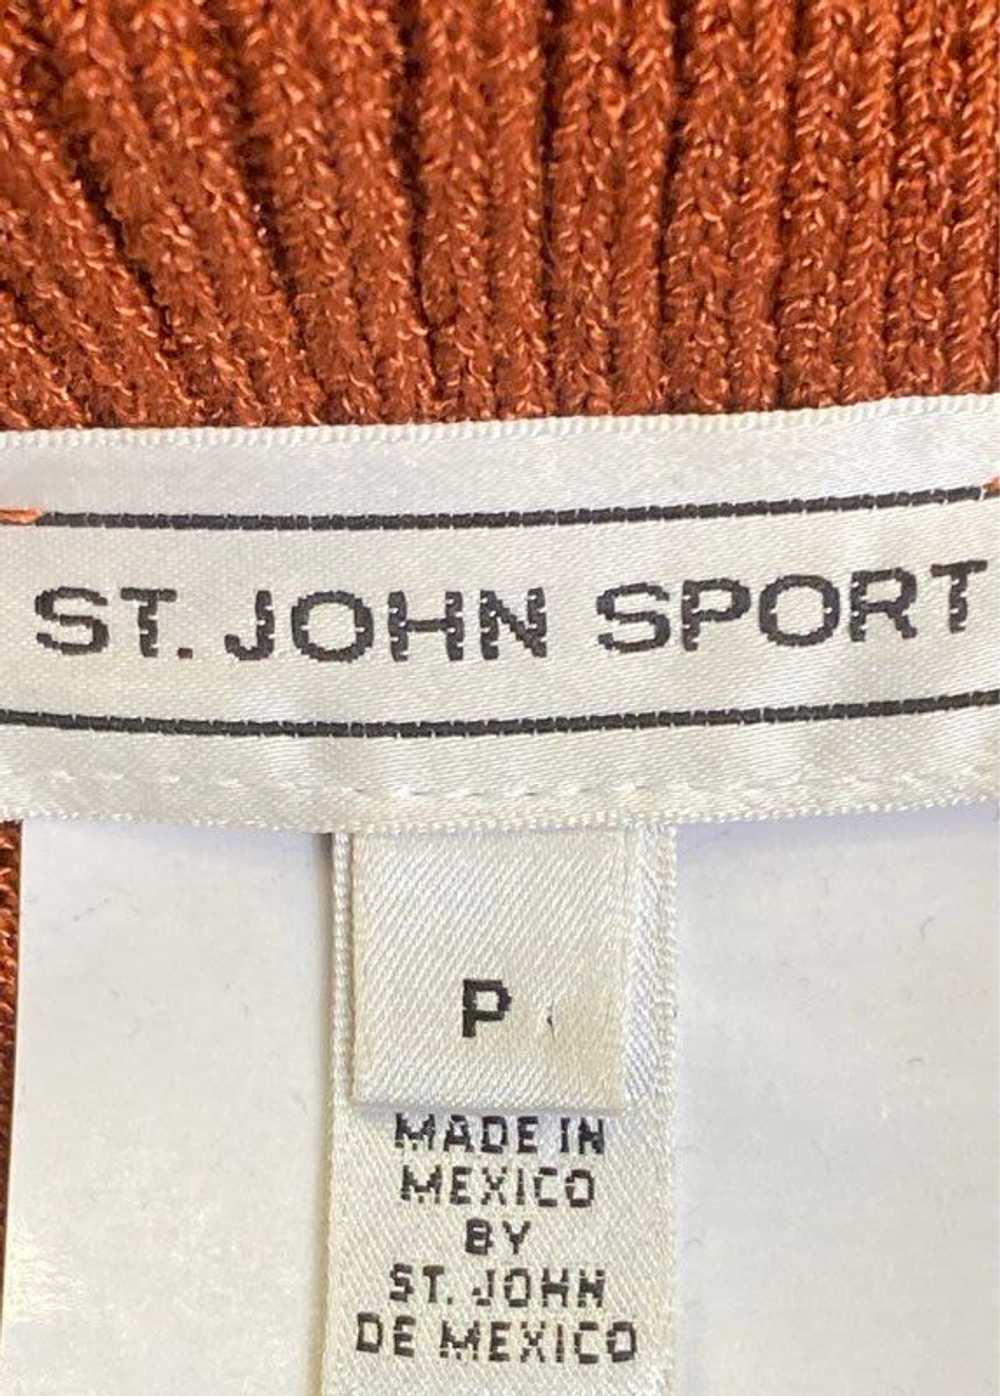 St. John Sport Rust Orange Knit Blazer - Size P - image 3